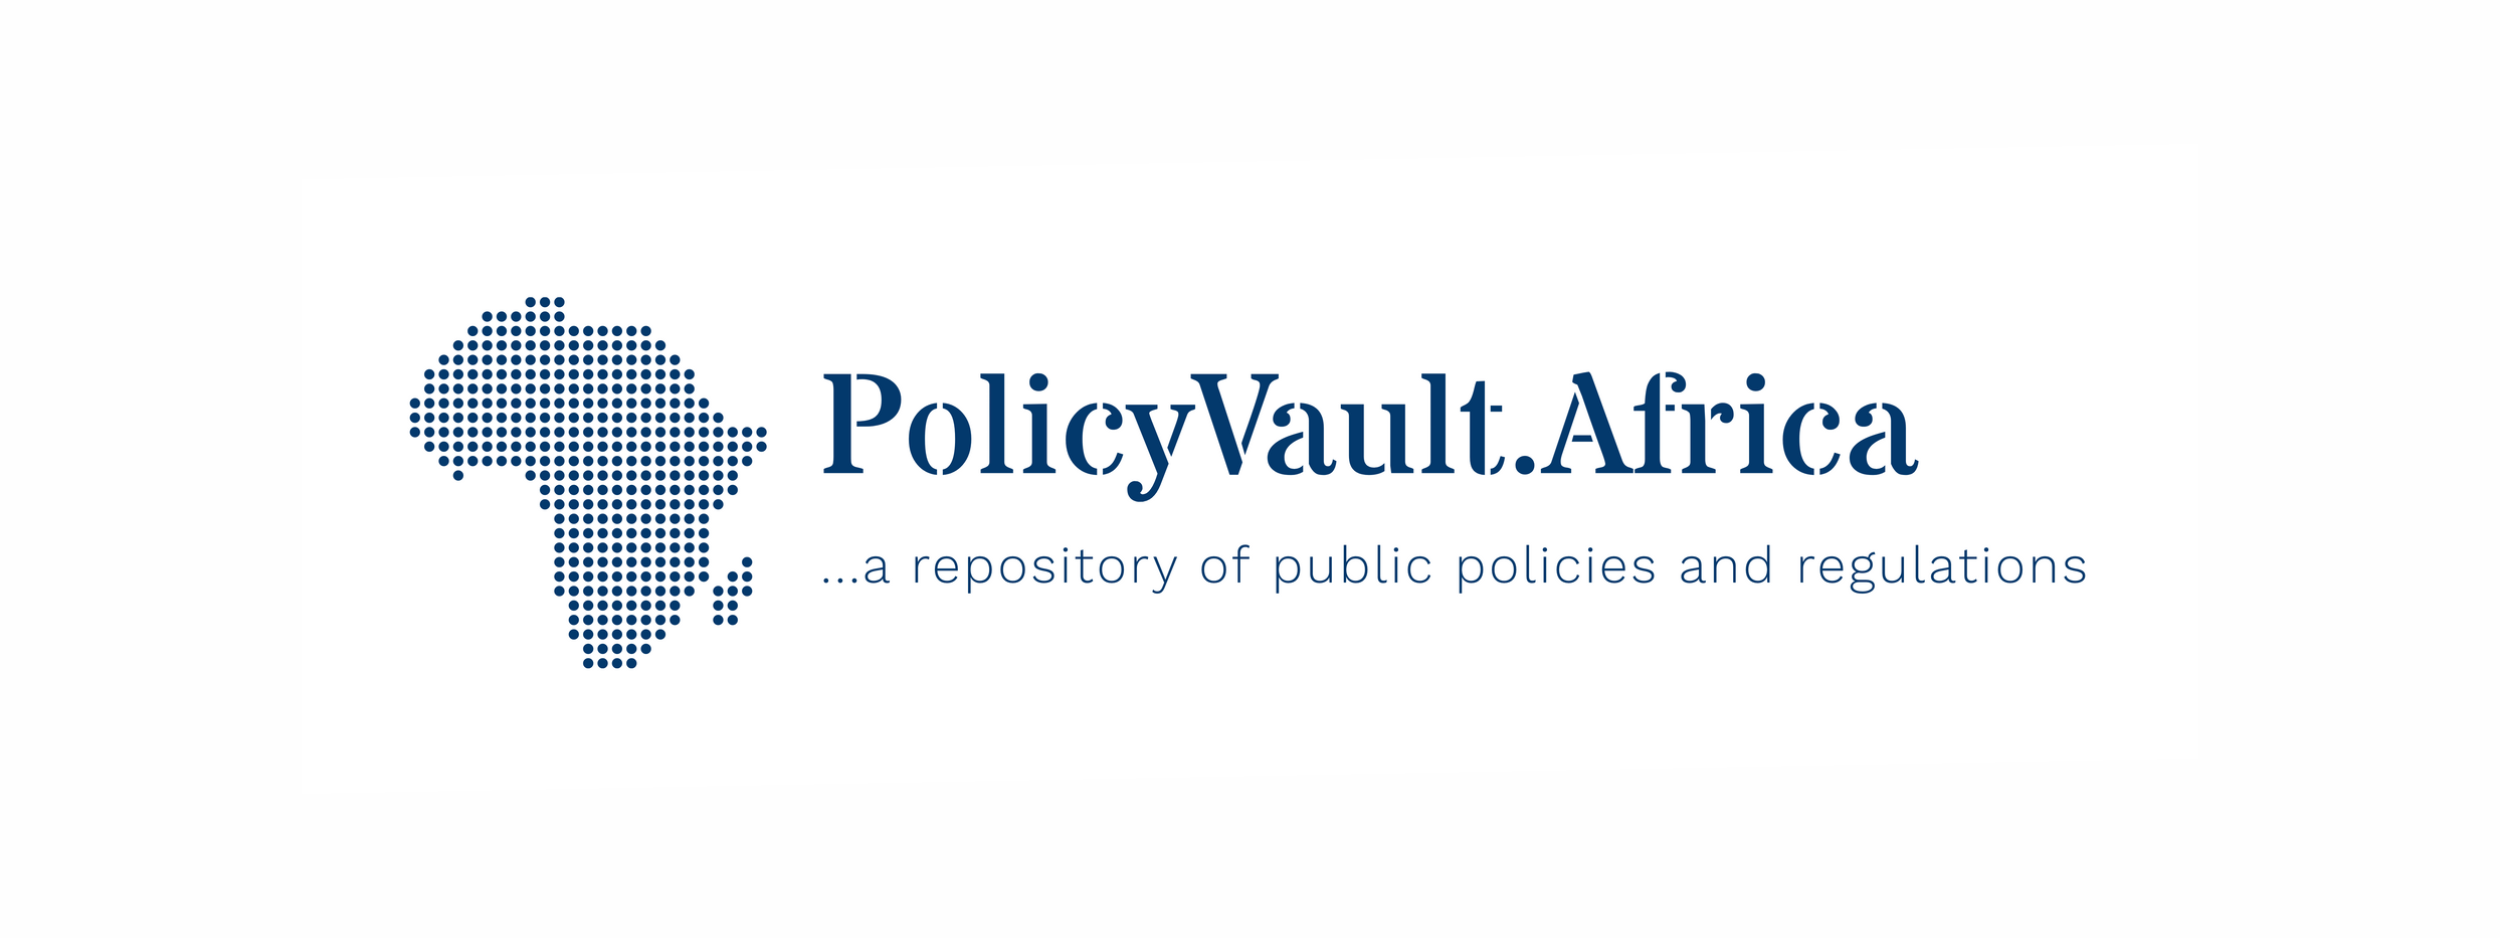 policy vault2